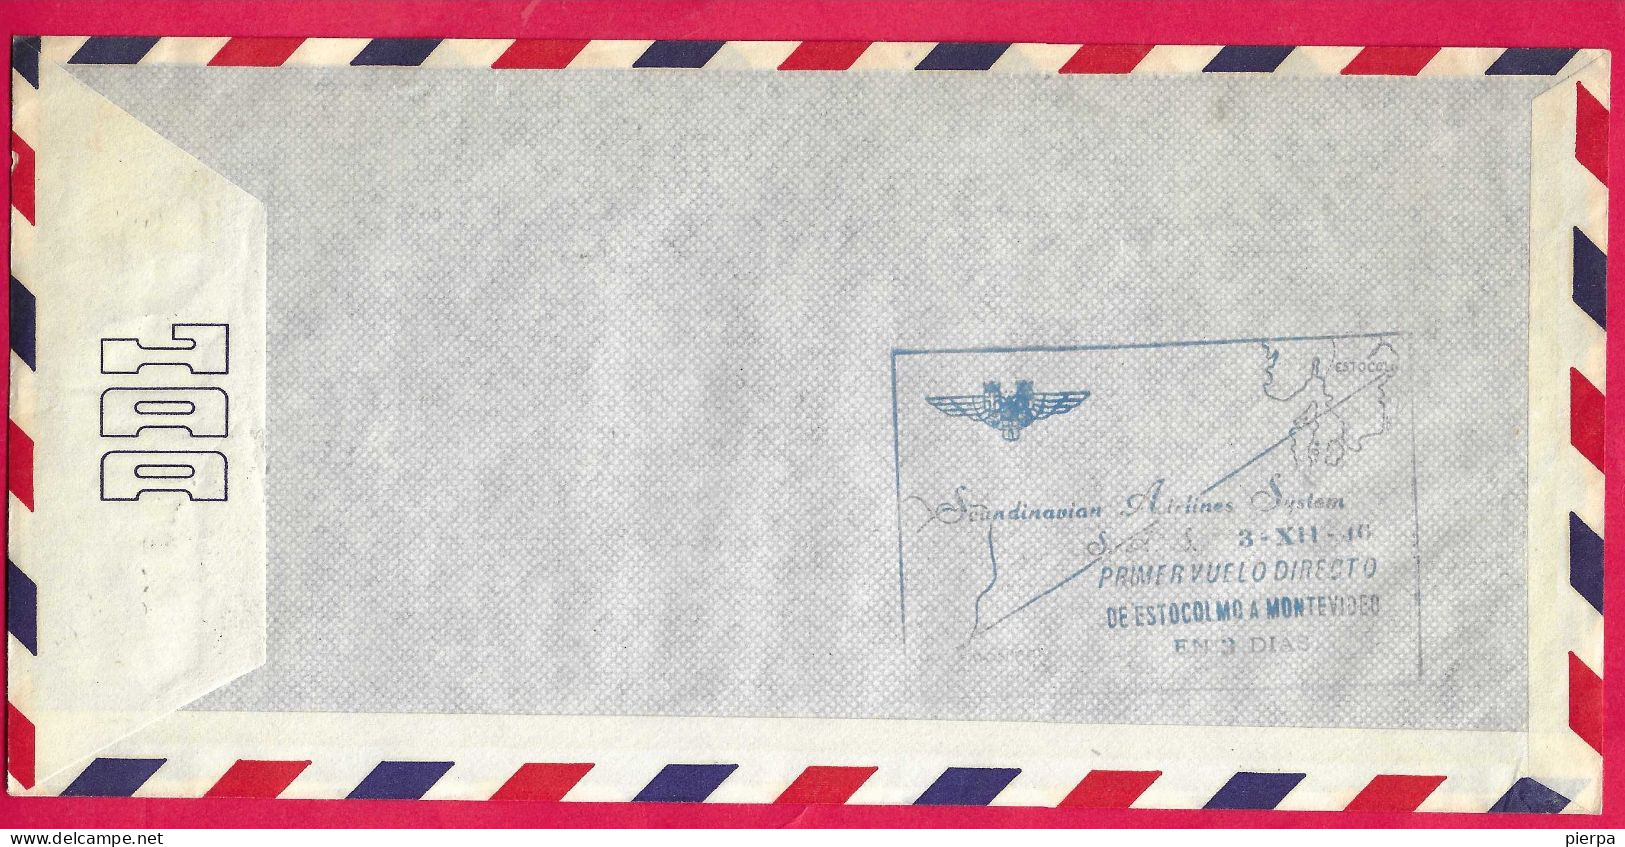 DANMARK - FIRST FLIGHT LUFTHAVN FROM KONEHAVN TO MONTEVIDEO * 30.11.1946* ON COMMERCIAL SIZE ENVELOPE - Airmail